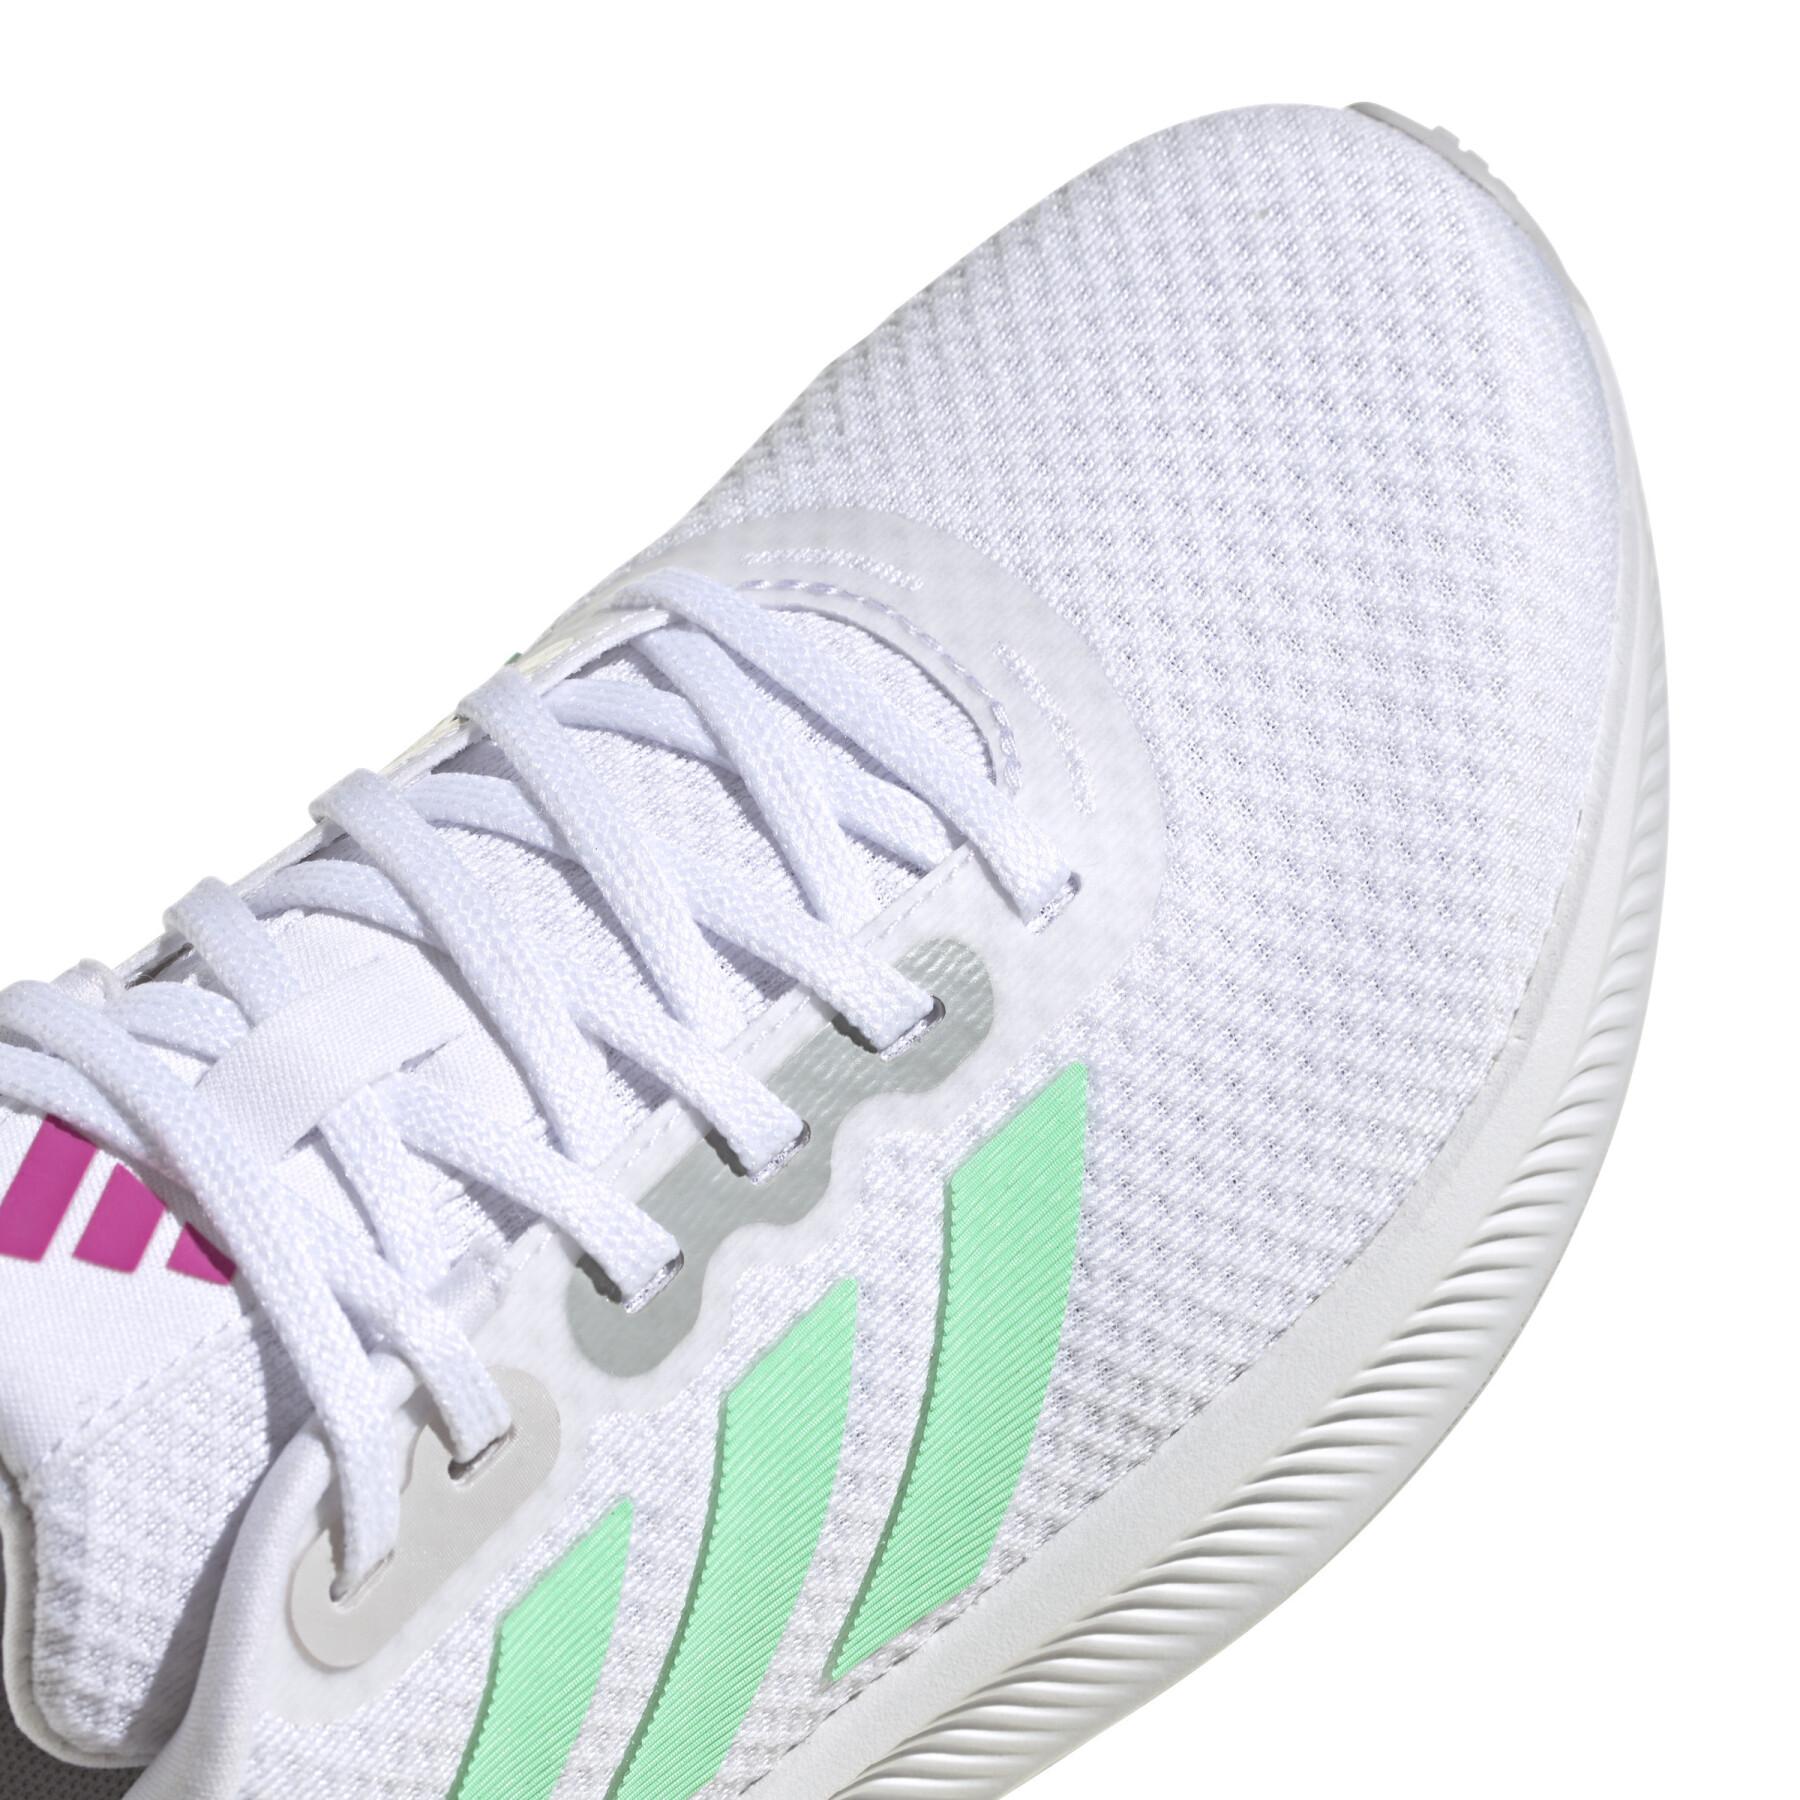 Women's running shoes adidas Runfalcon 3